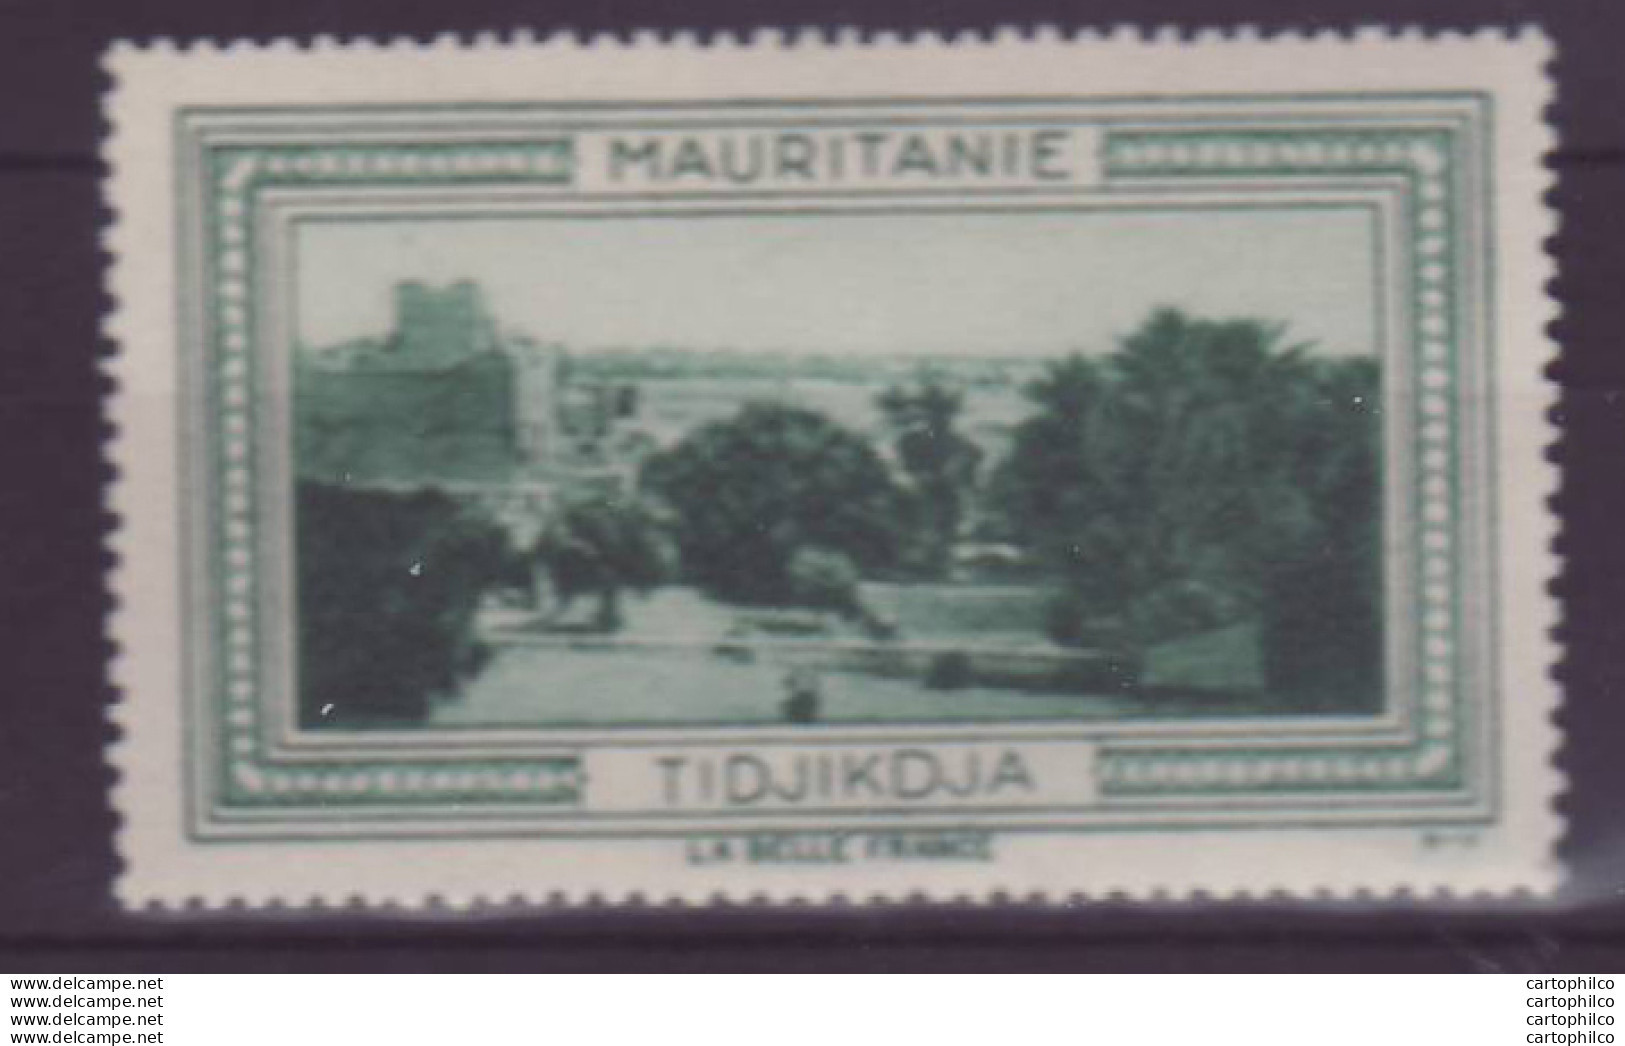 Vignette ** Mauritanie Tidjikdja - Ongebruikt